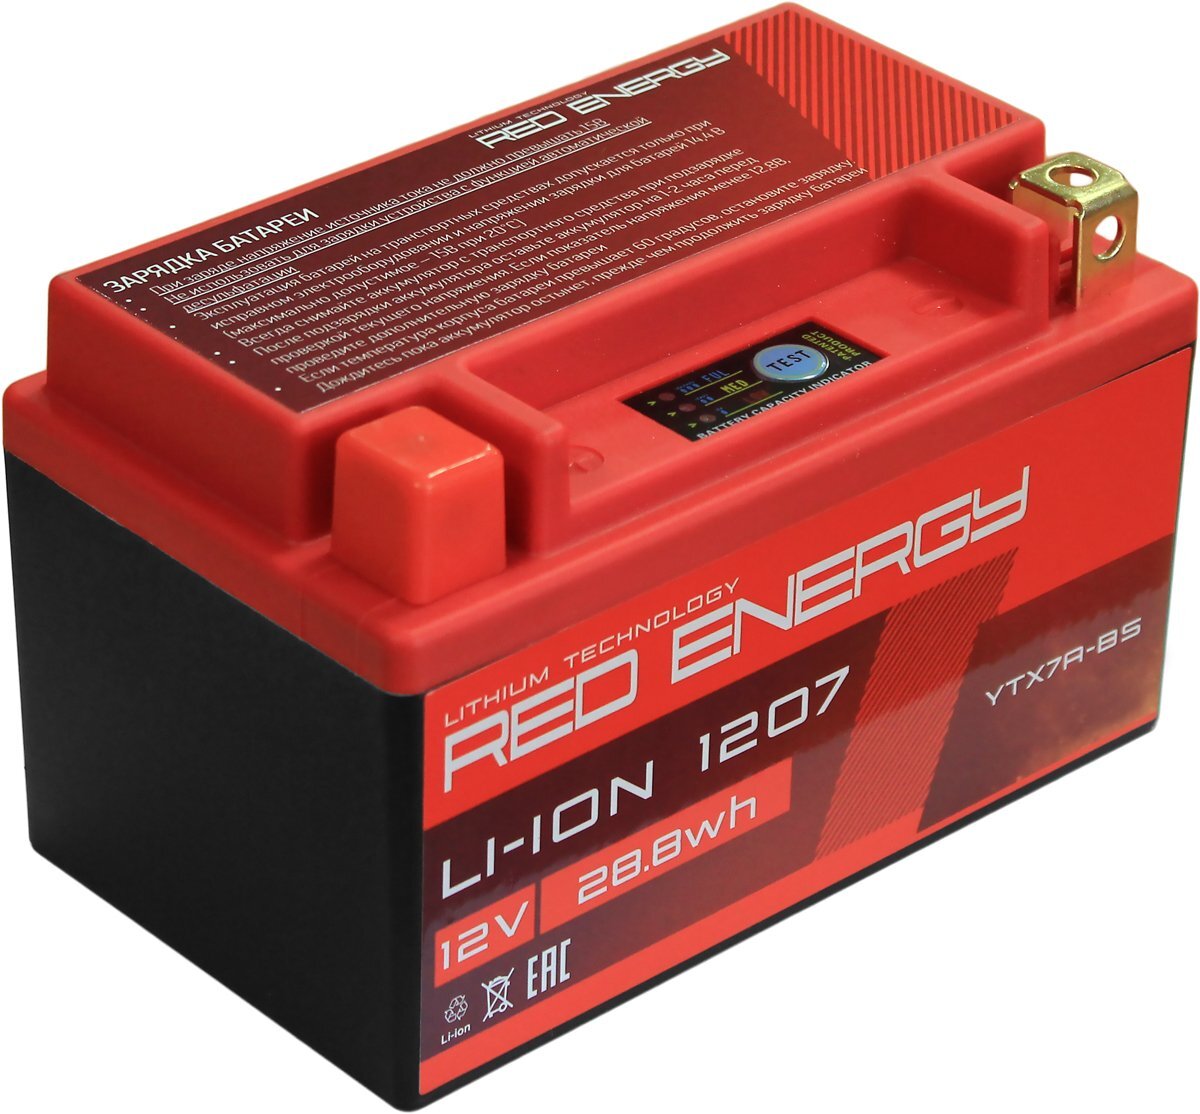 Купить аккумулятор 1207. Red Energy li-ion 1204. АКБ 1207. Аккумулятор li-lon 48×67×110m. Автономный источник питания на аккумулятор Lipo 4.